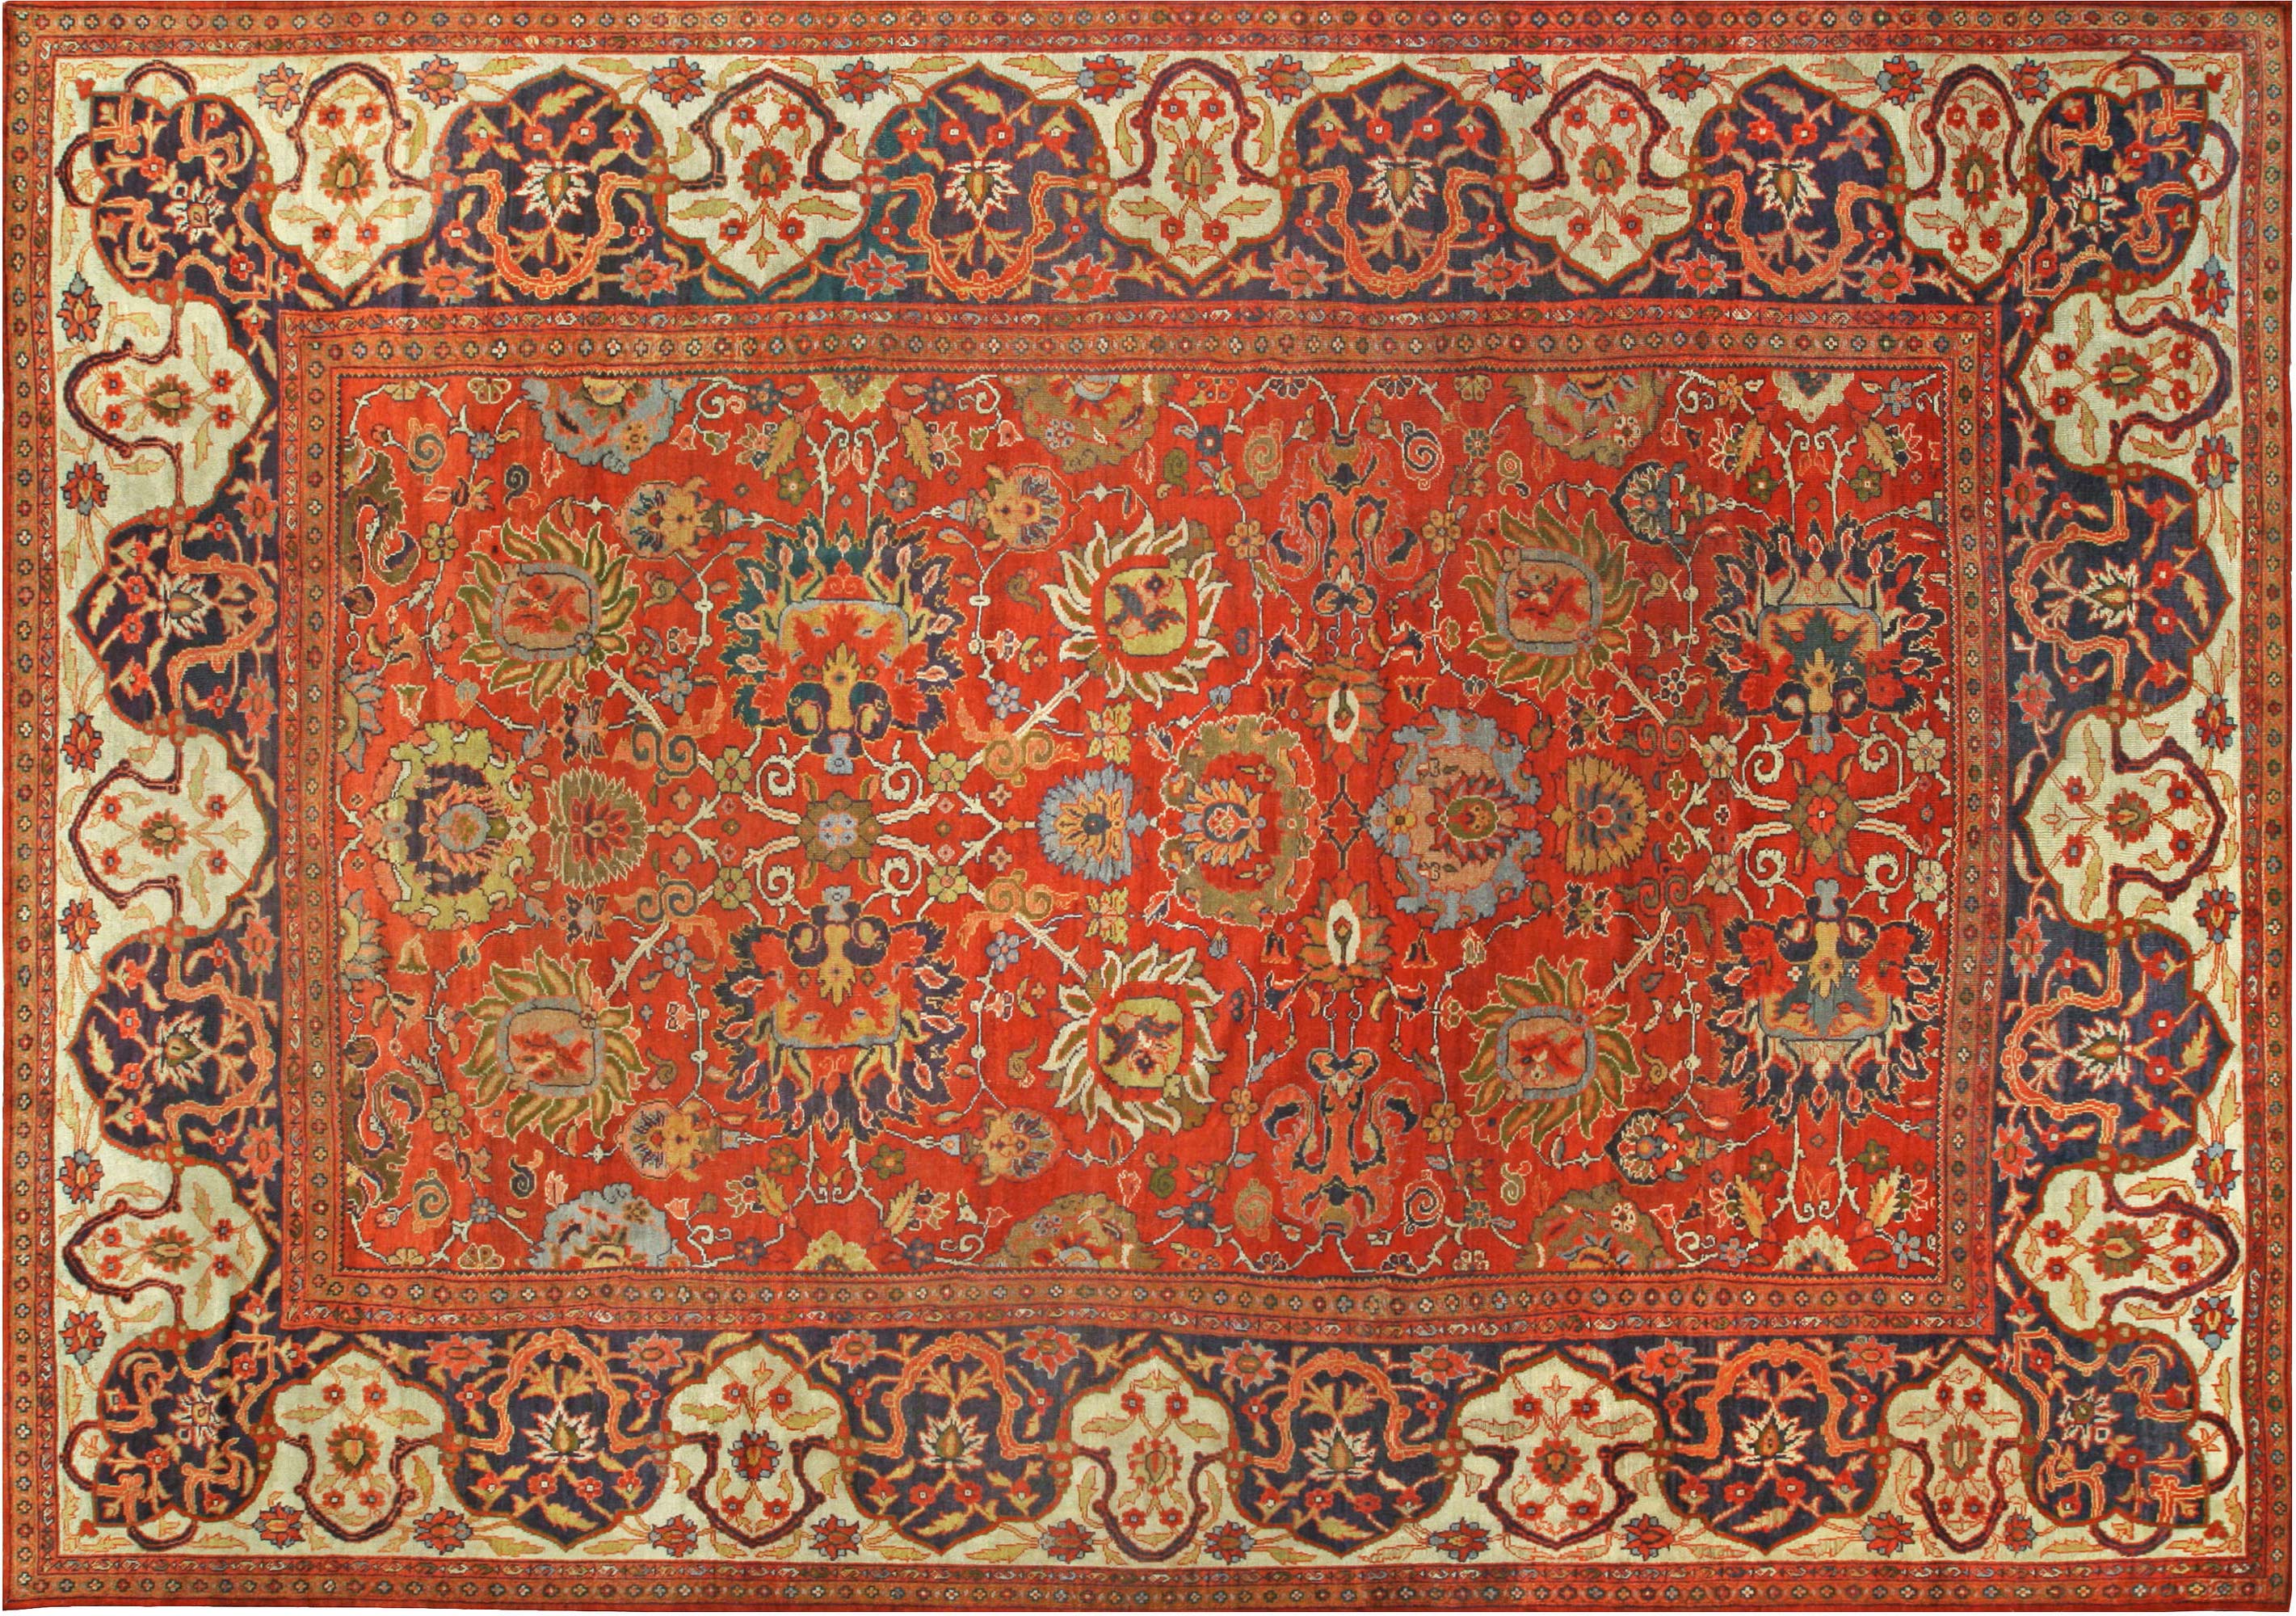 Vintage Rug,Turkish Carpet,Persian Carpet,Handmade Carpet,Vintage Carpet,Persian Rug,Turkish Rug,Blue Carpet,Beige Carpet